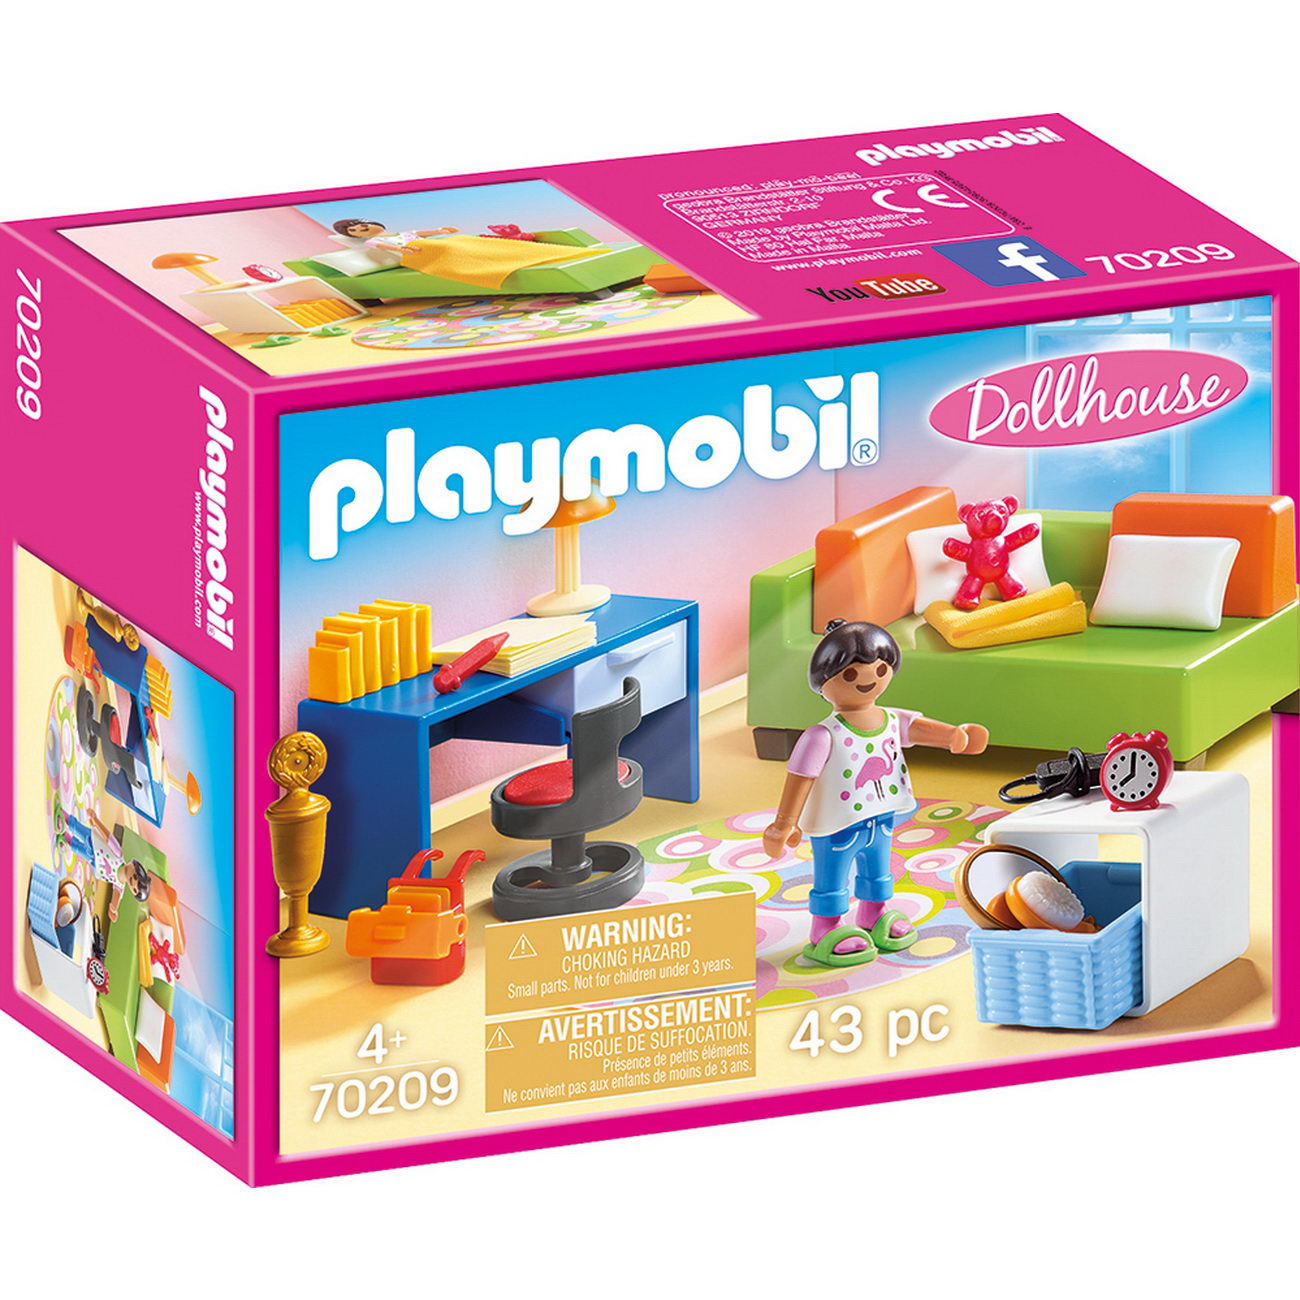 Playmobil 70209 - Jugendzimmer (Dollhouse)